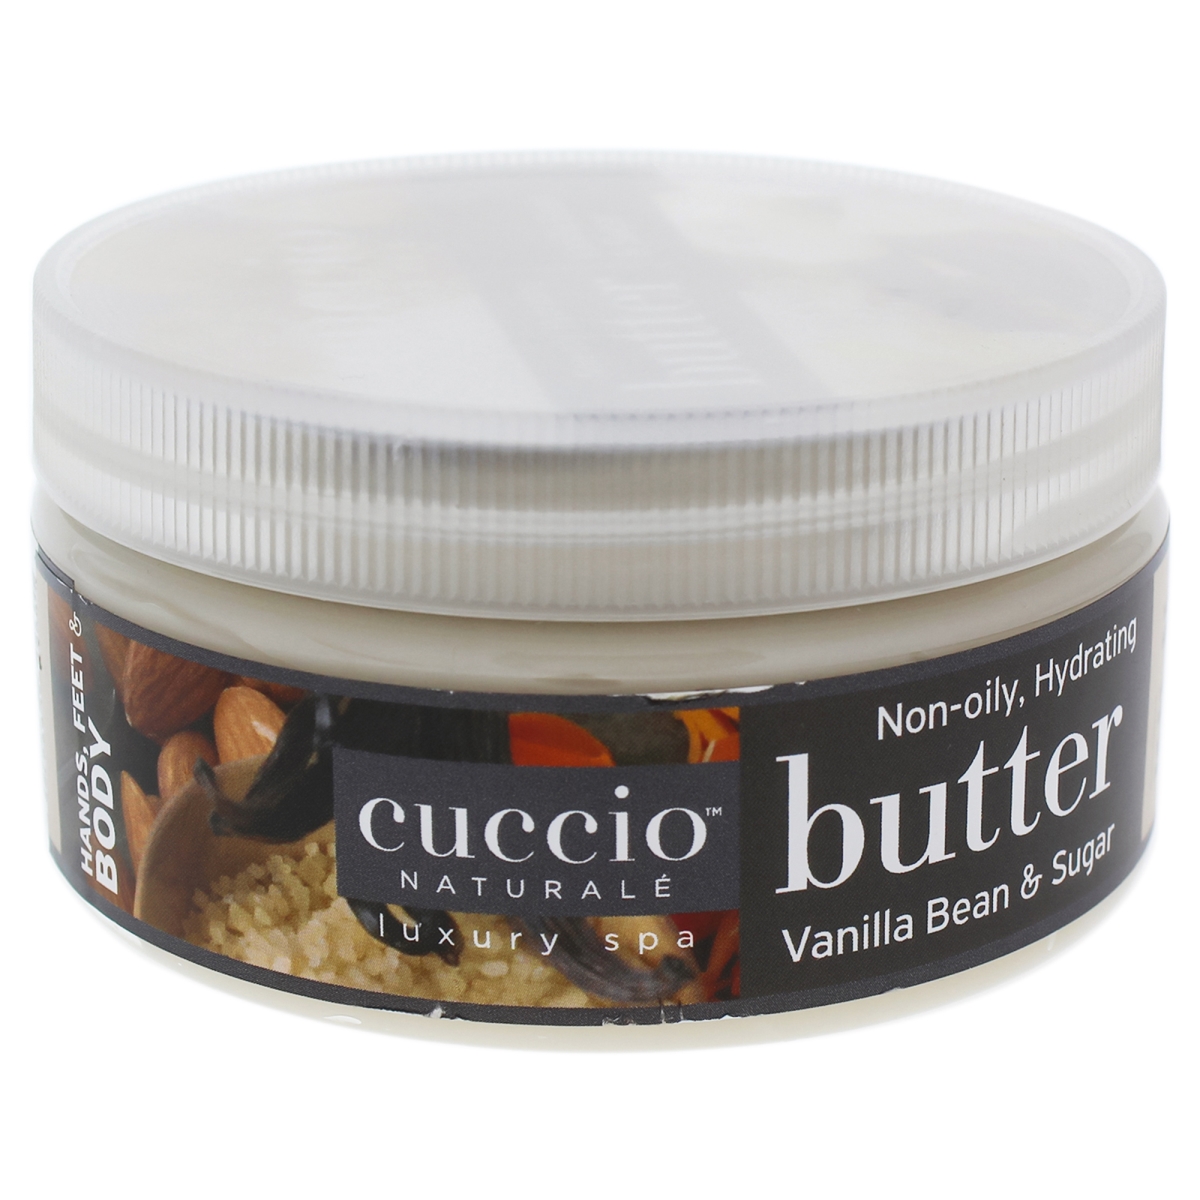 I0090884 Butter Blend Body Lotion For Unisex - Vanilla Bean & Sugar - 8 Oz